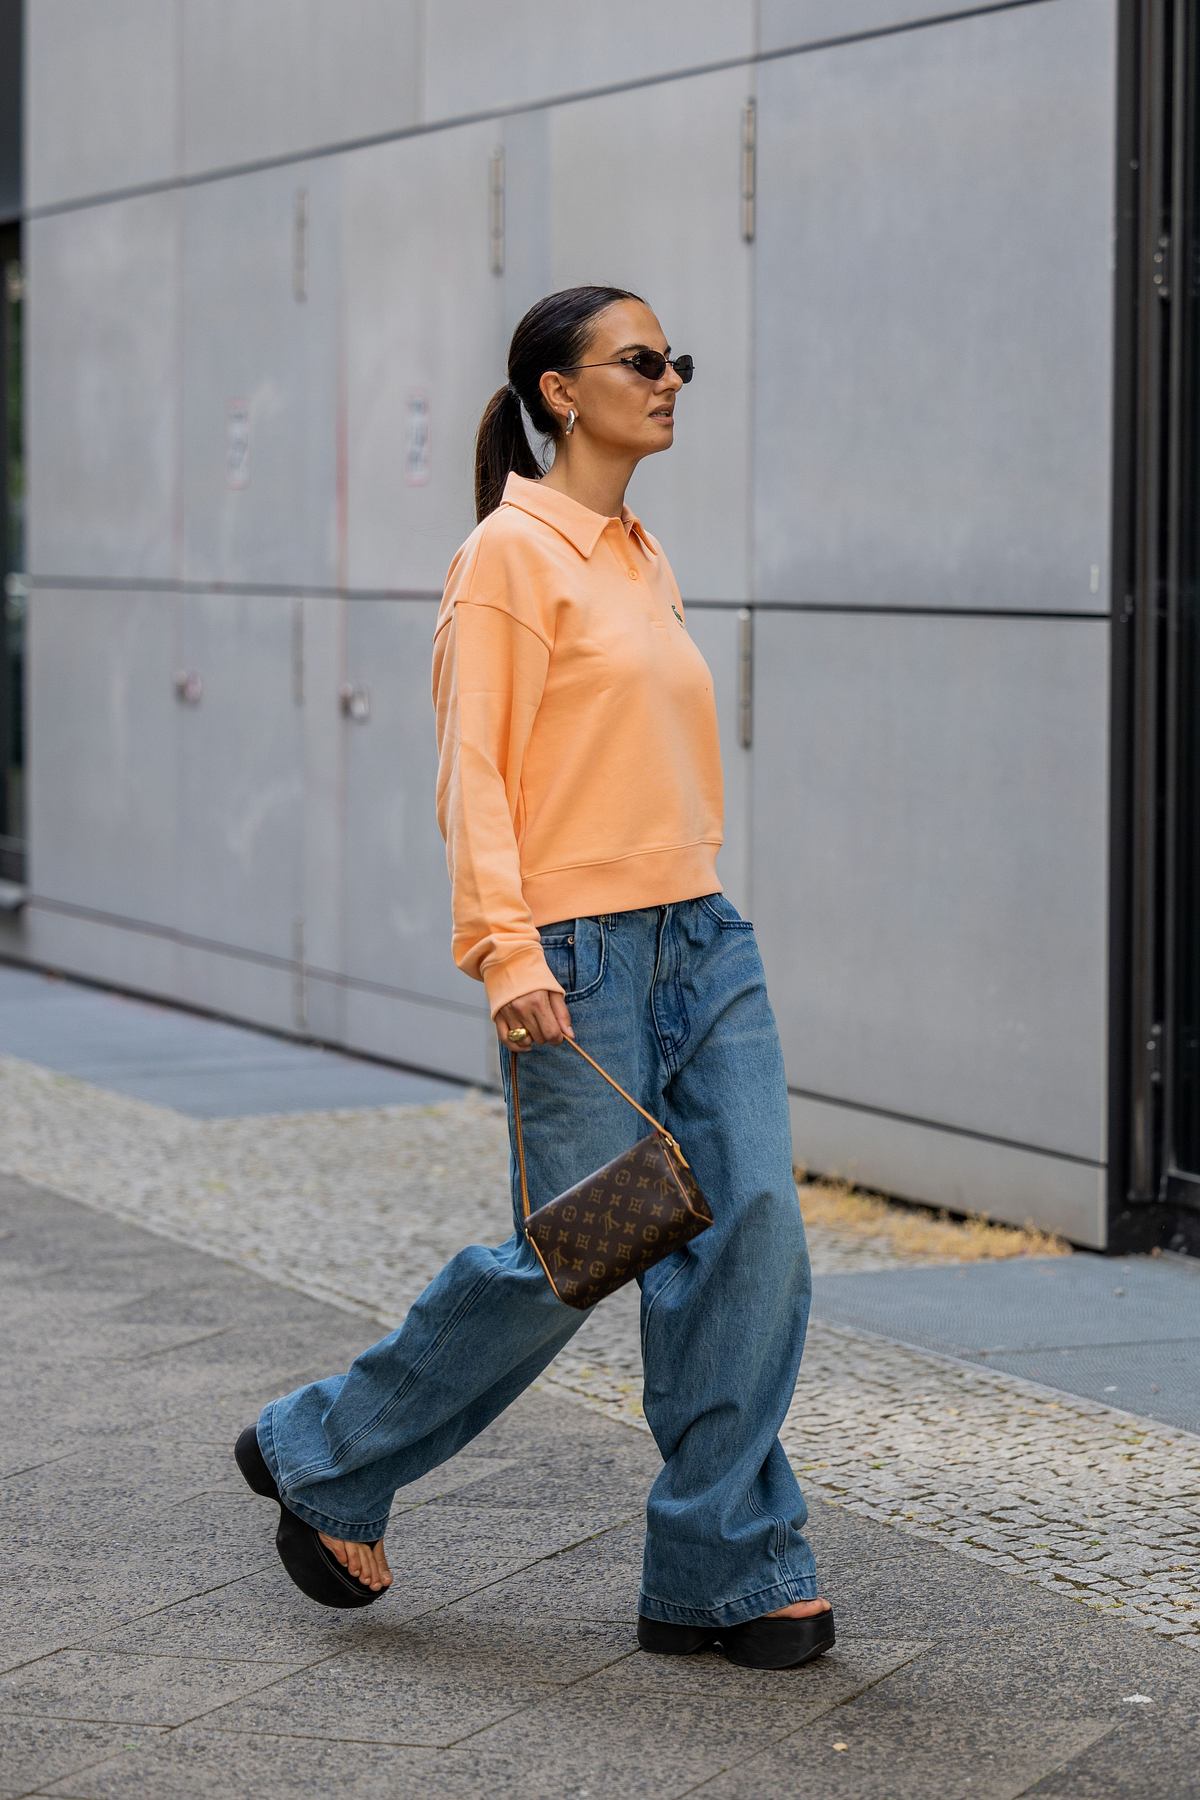 Jeans-Looks mit Platau-Sandalen